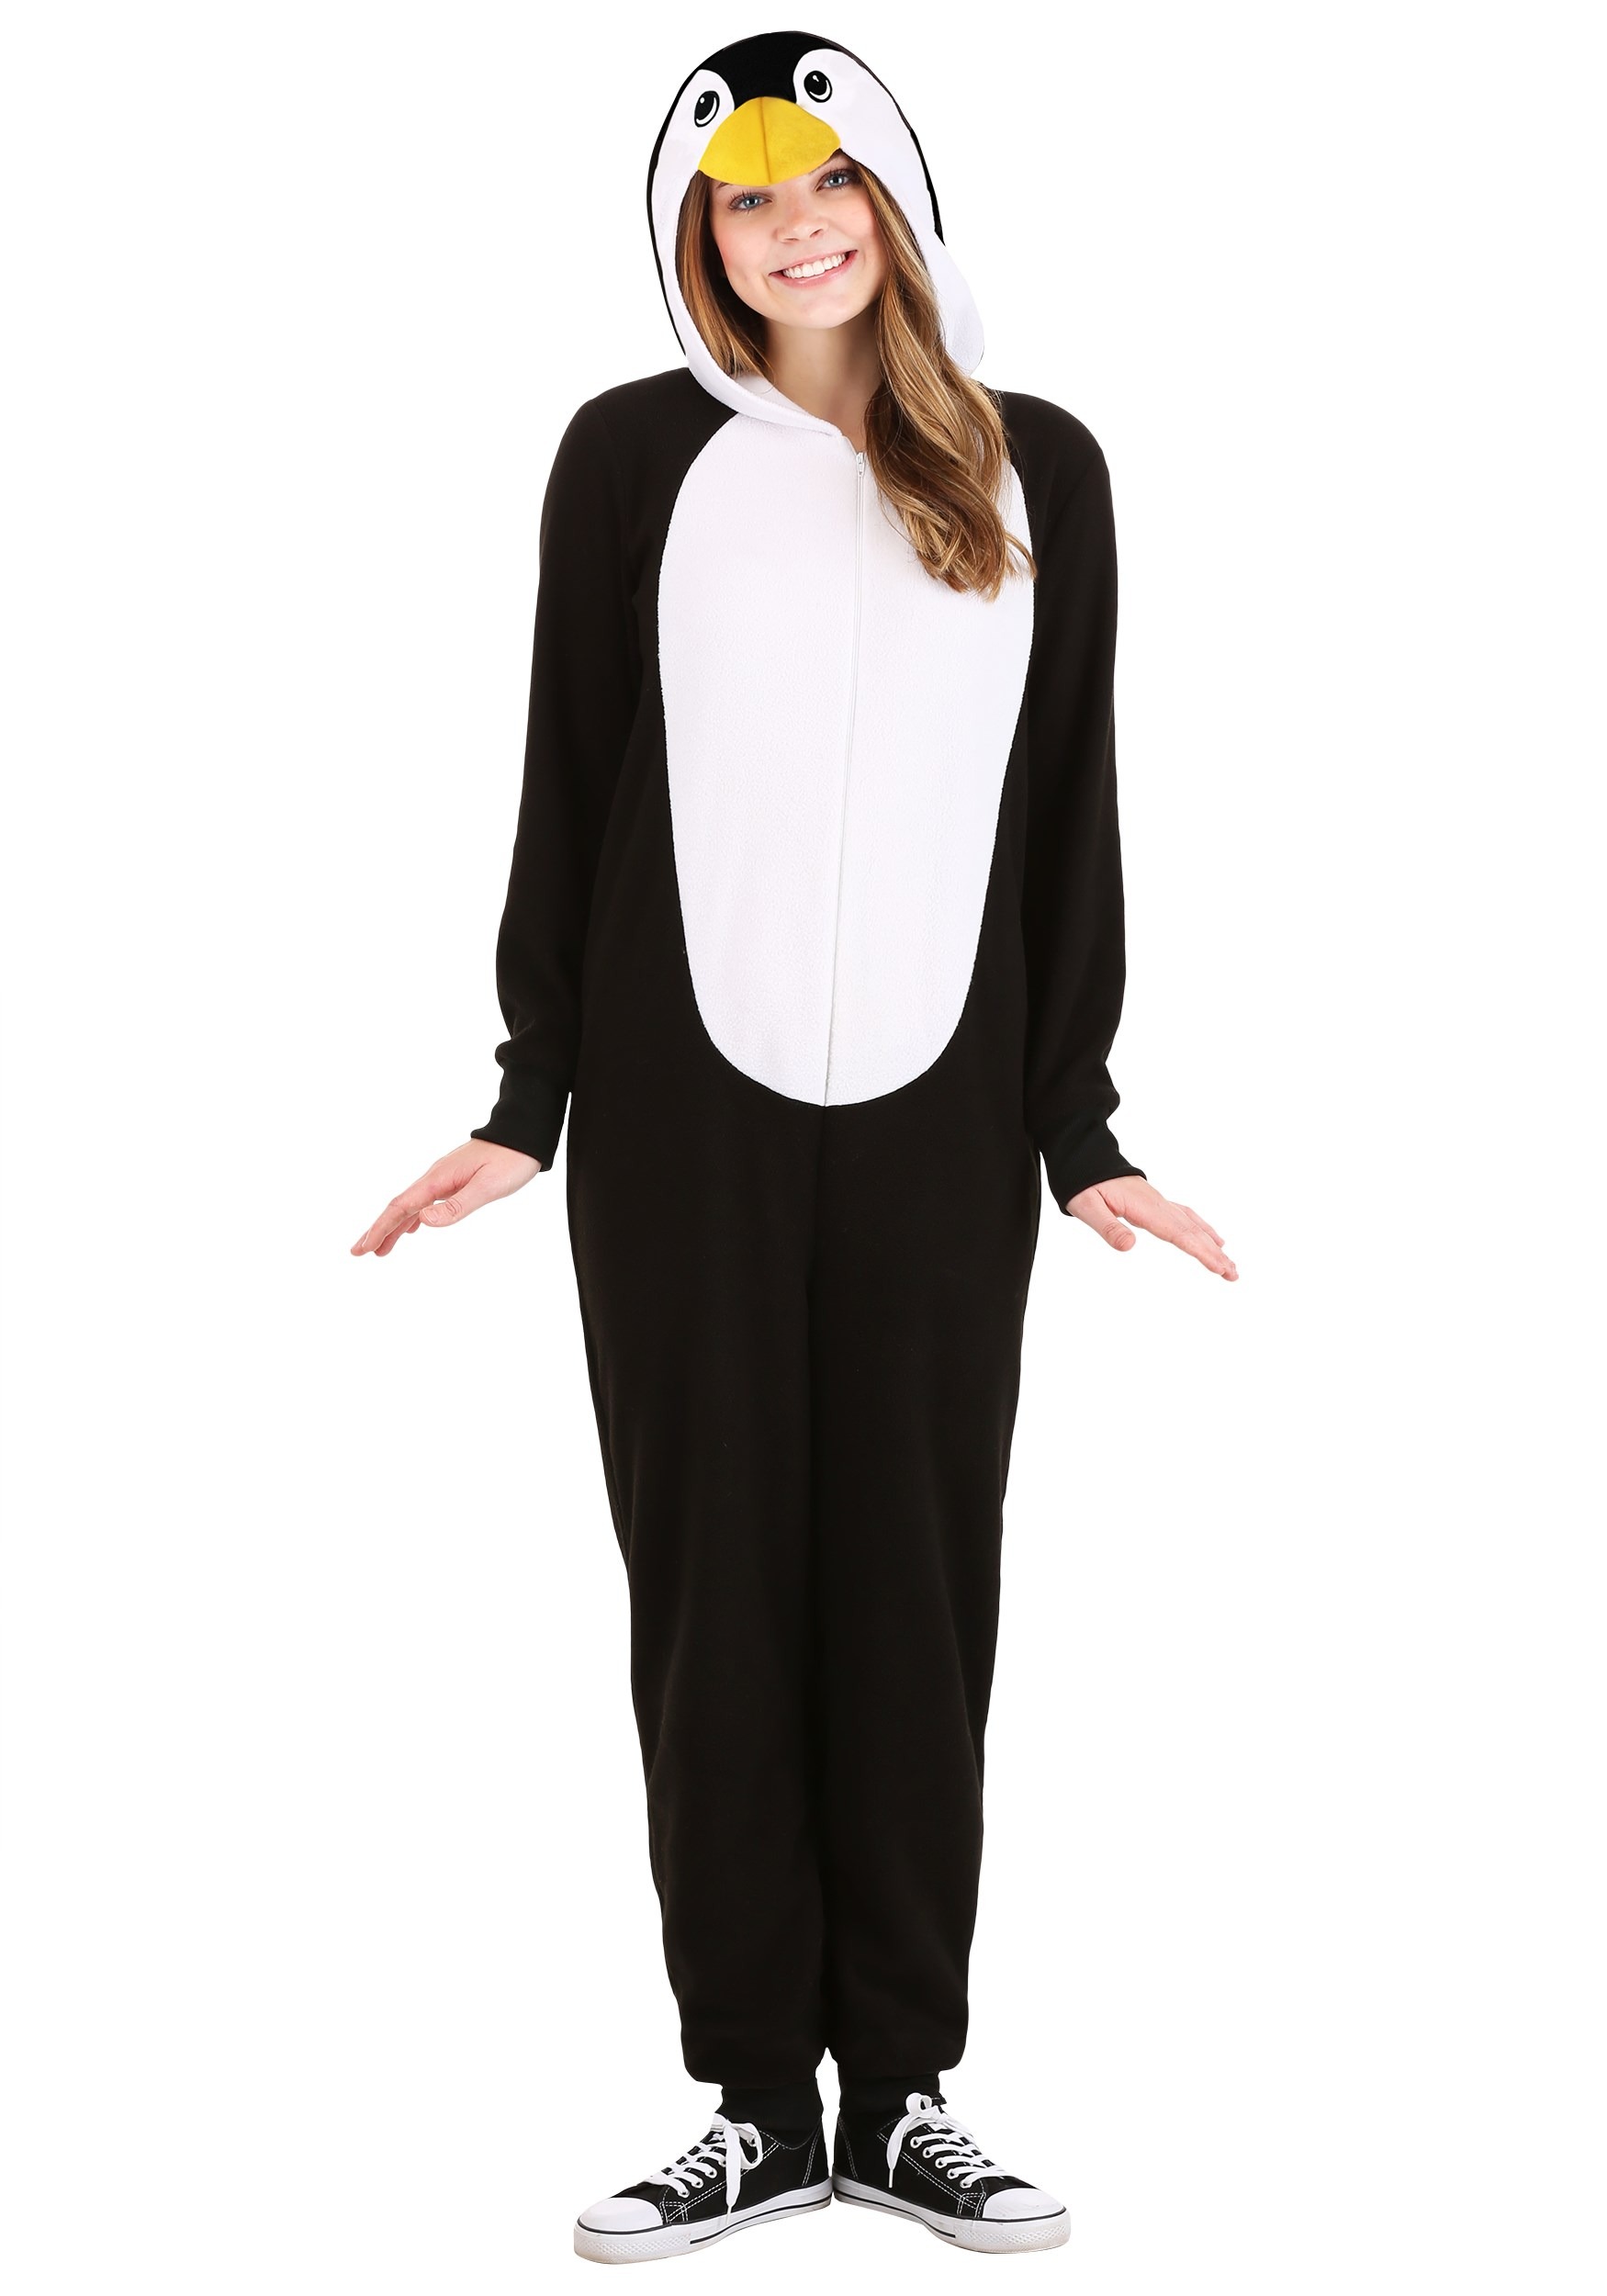 Photos - Fancy Dress FUN Costumes Exclusive Adult Pajama Penguin Costume Black/White/Ye